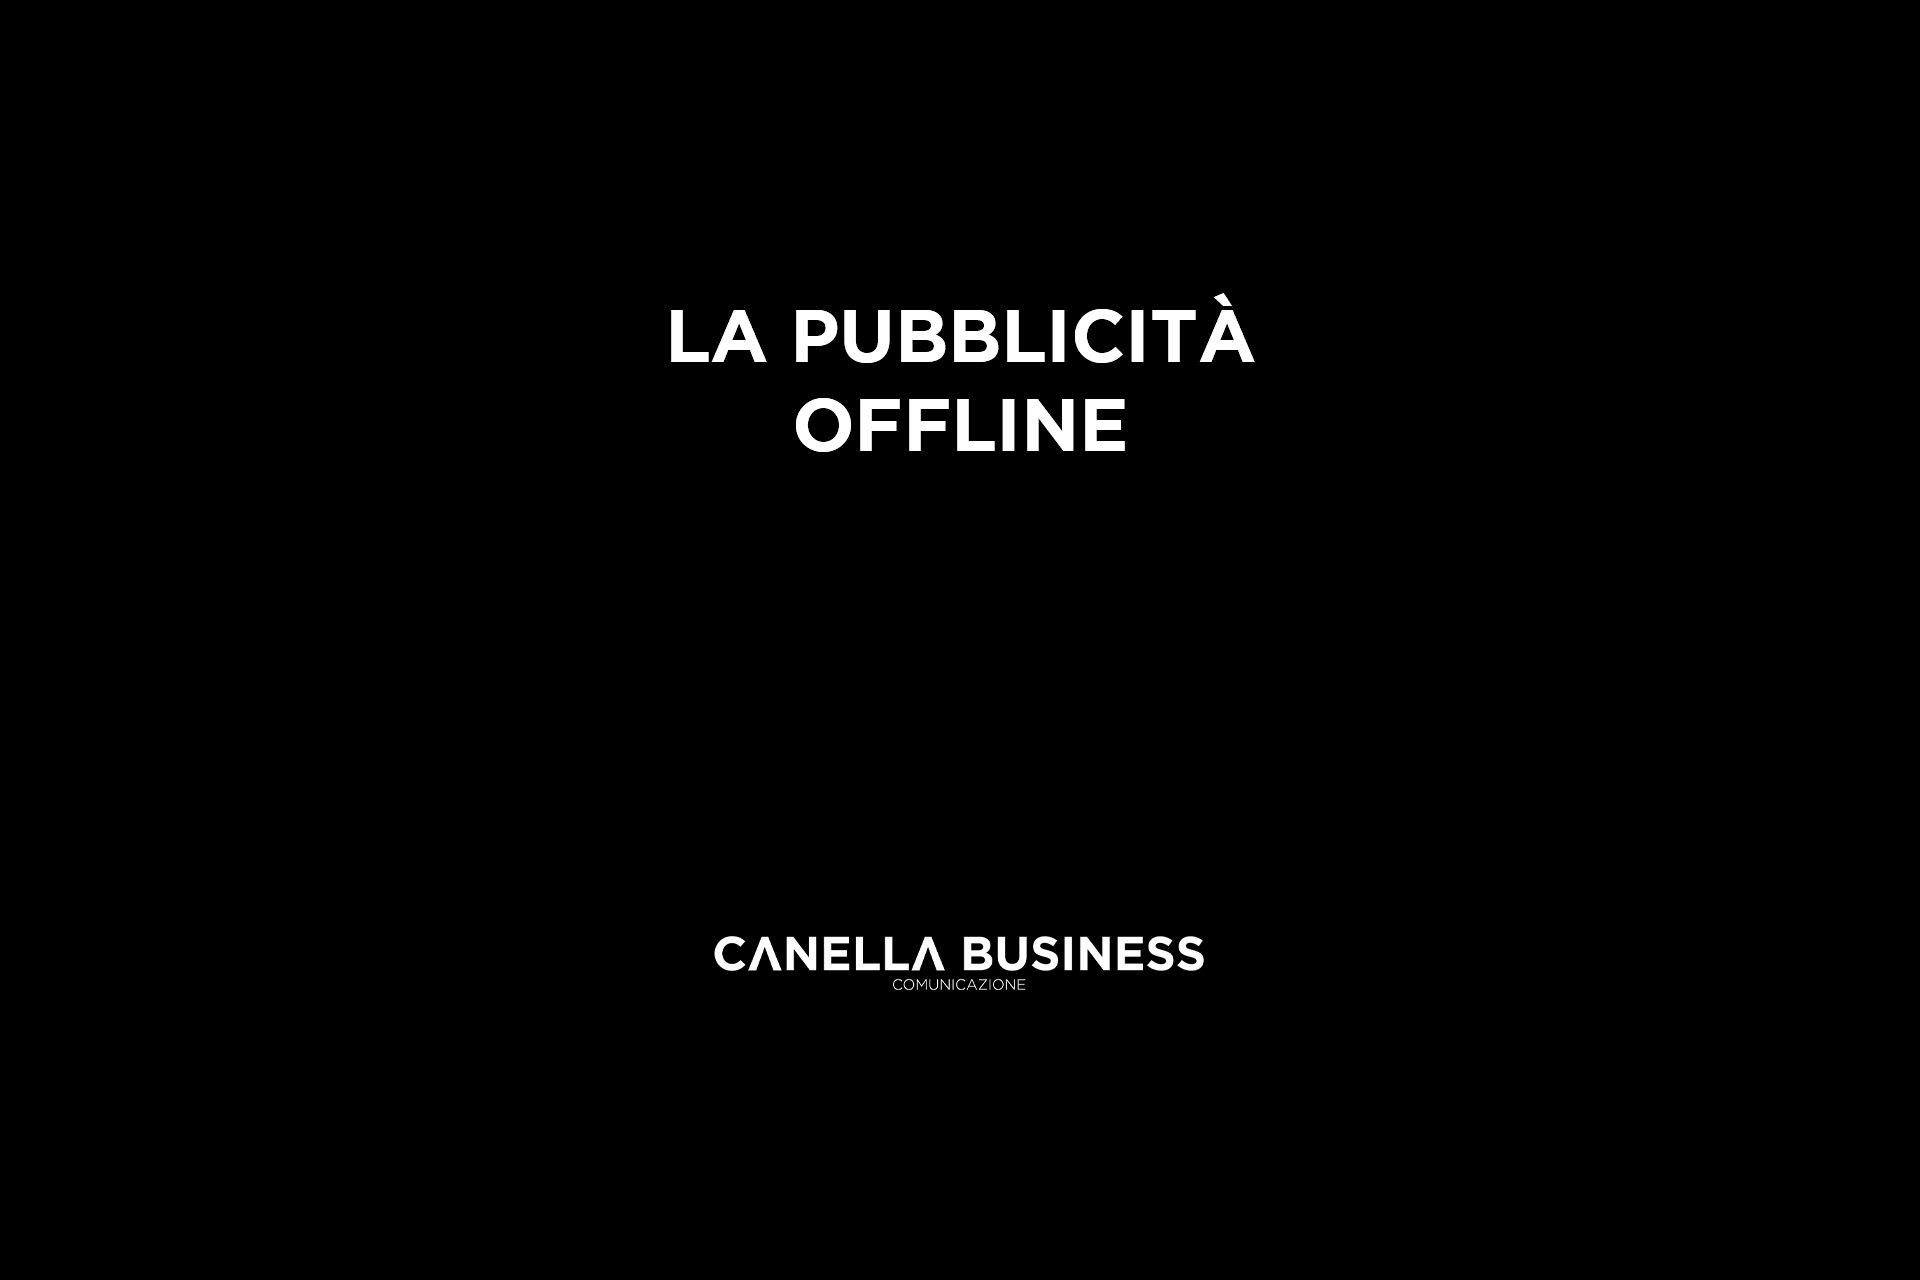 La Pubblicità Offline